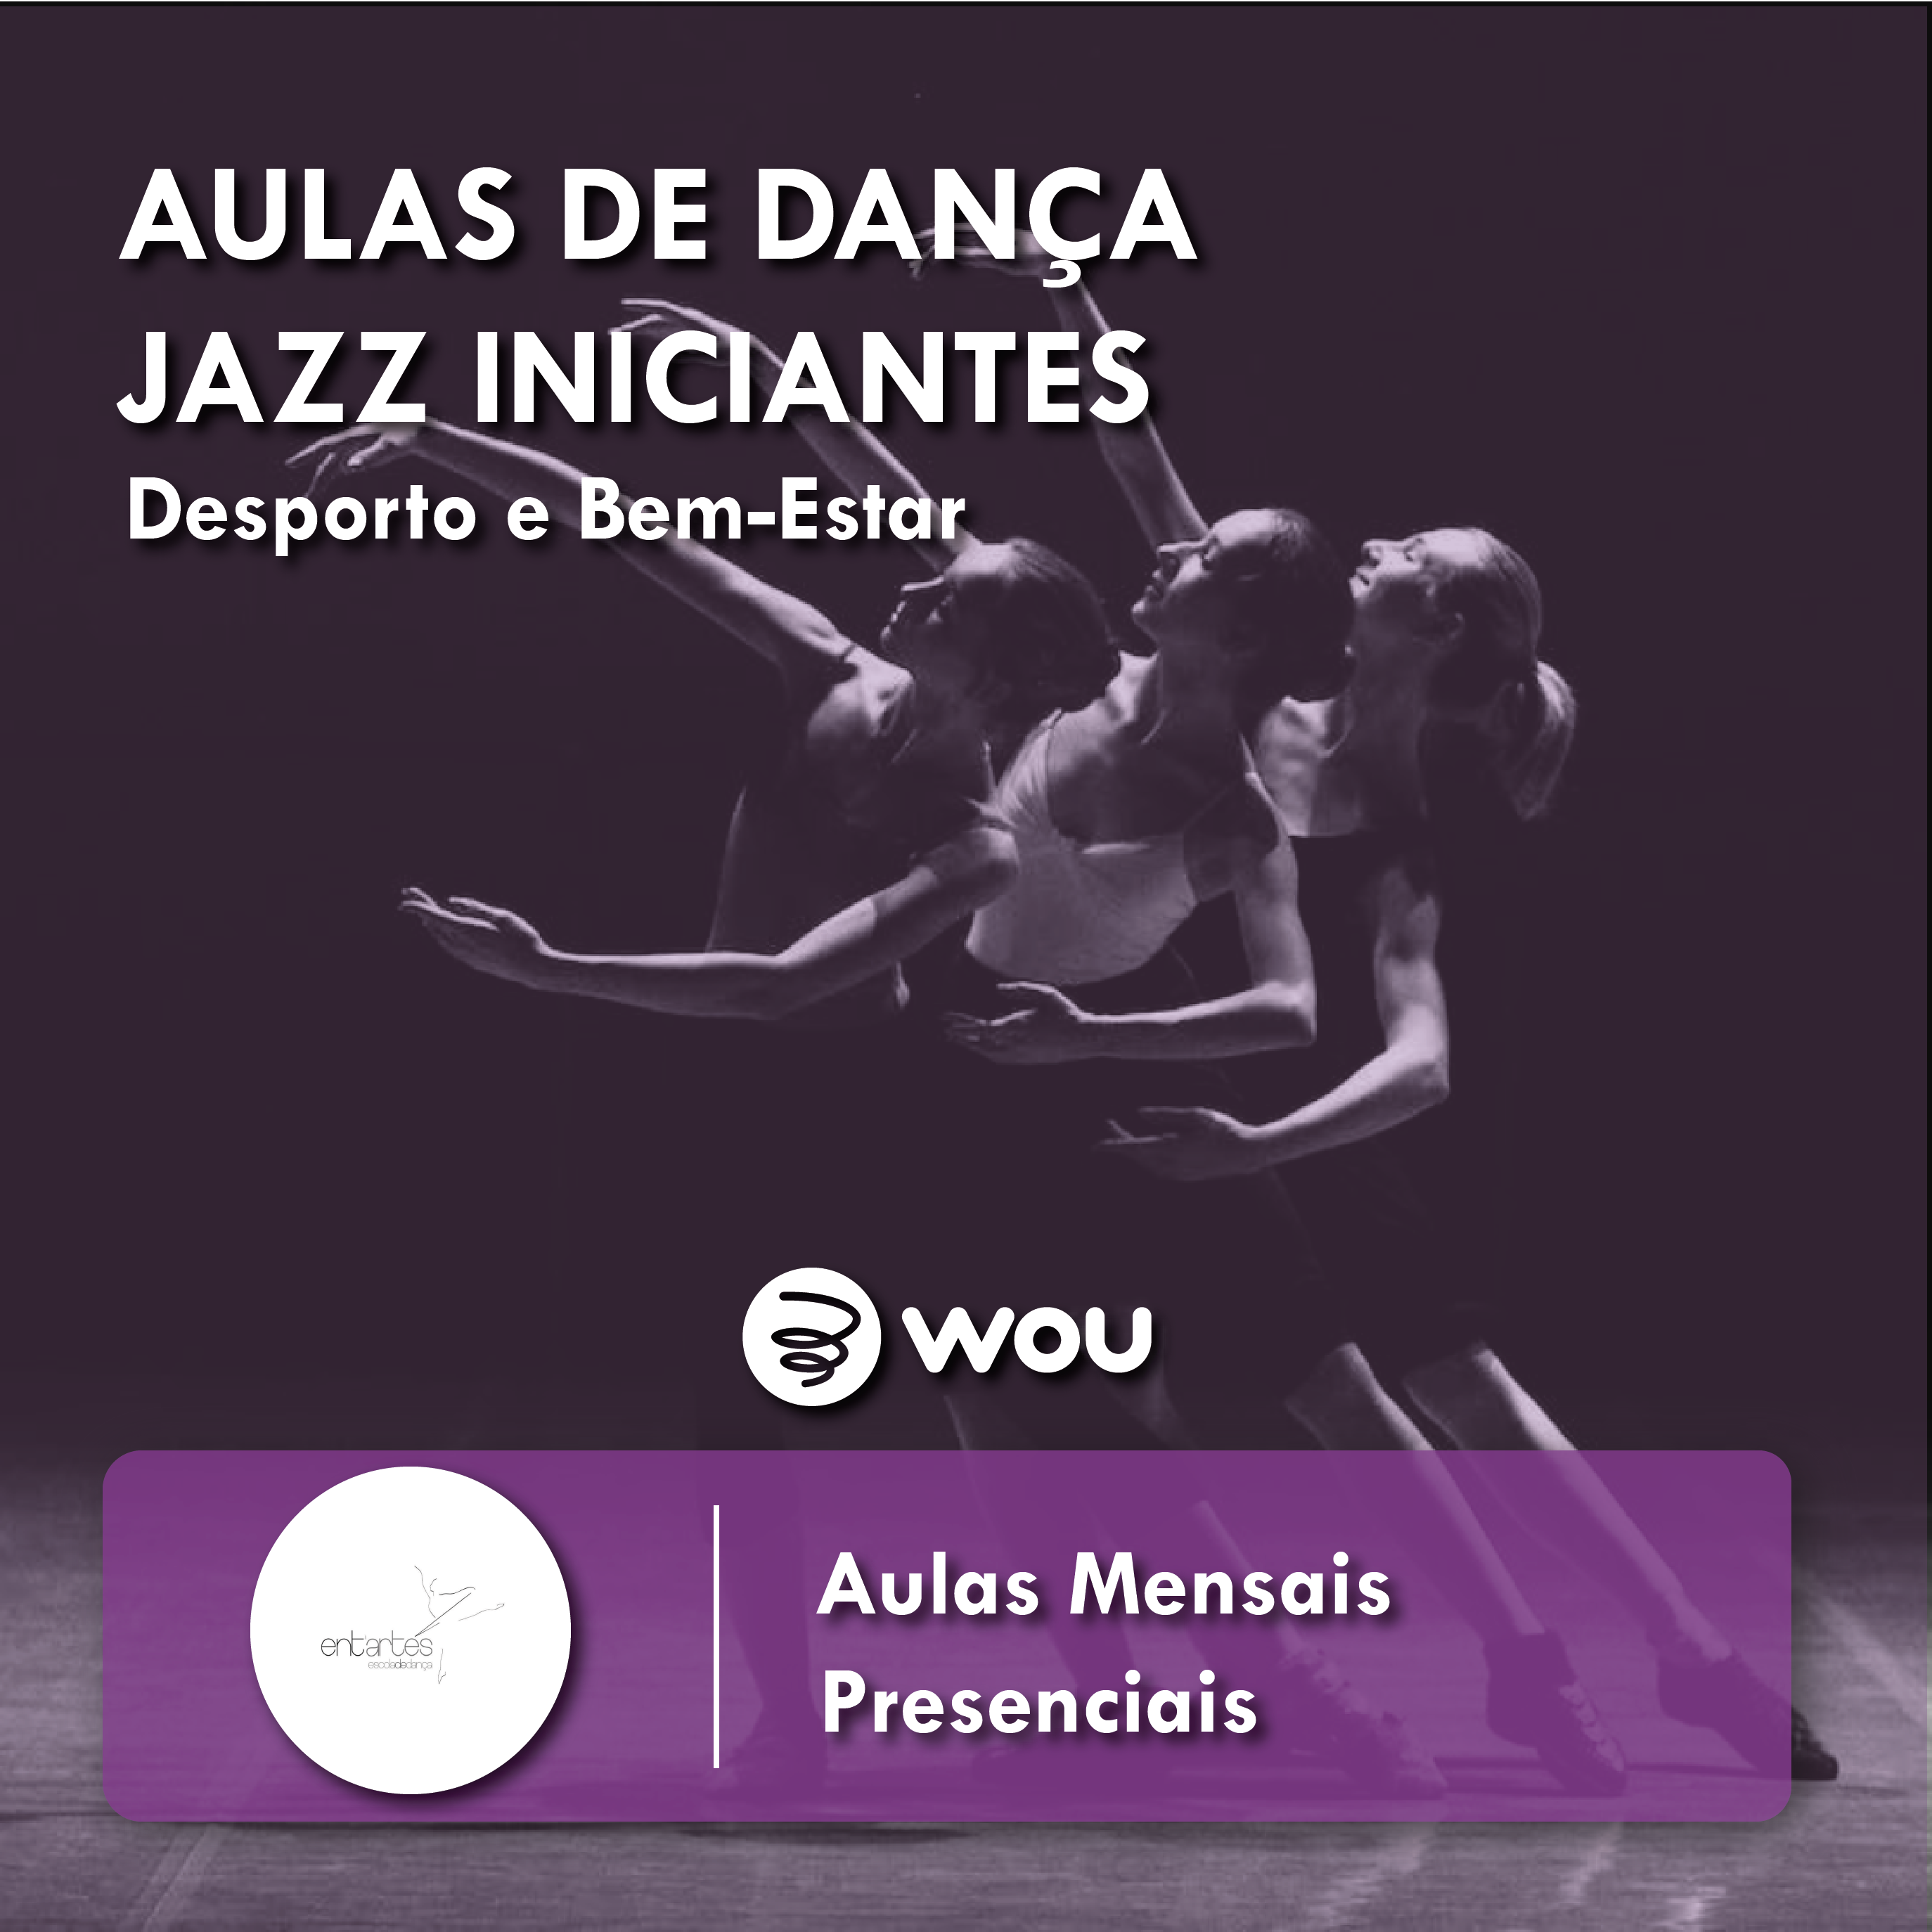 Classes of Jazz for Beginners in Braga